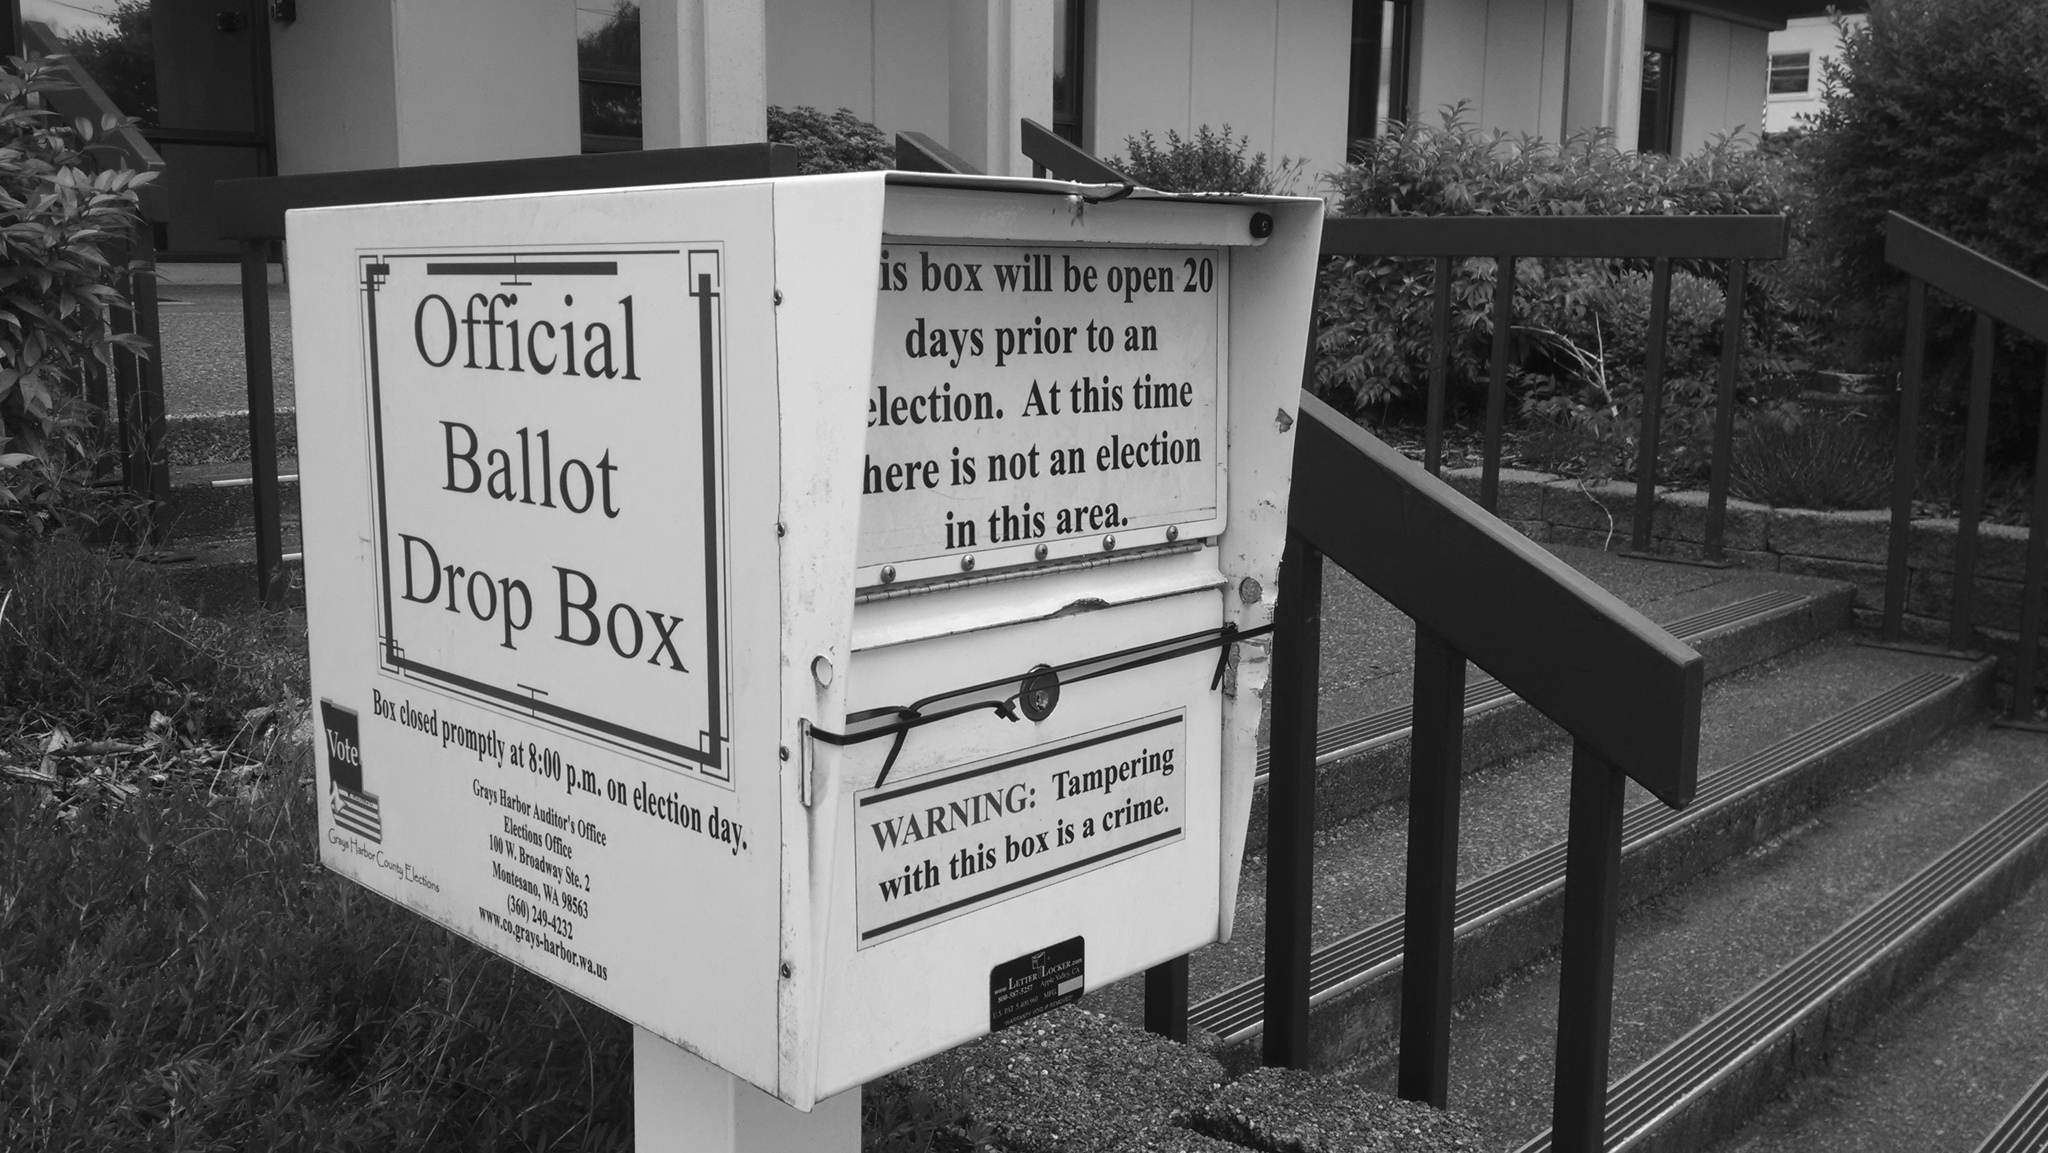 New ballot drop box coming to Montesano